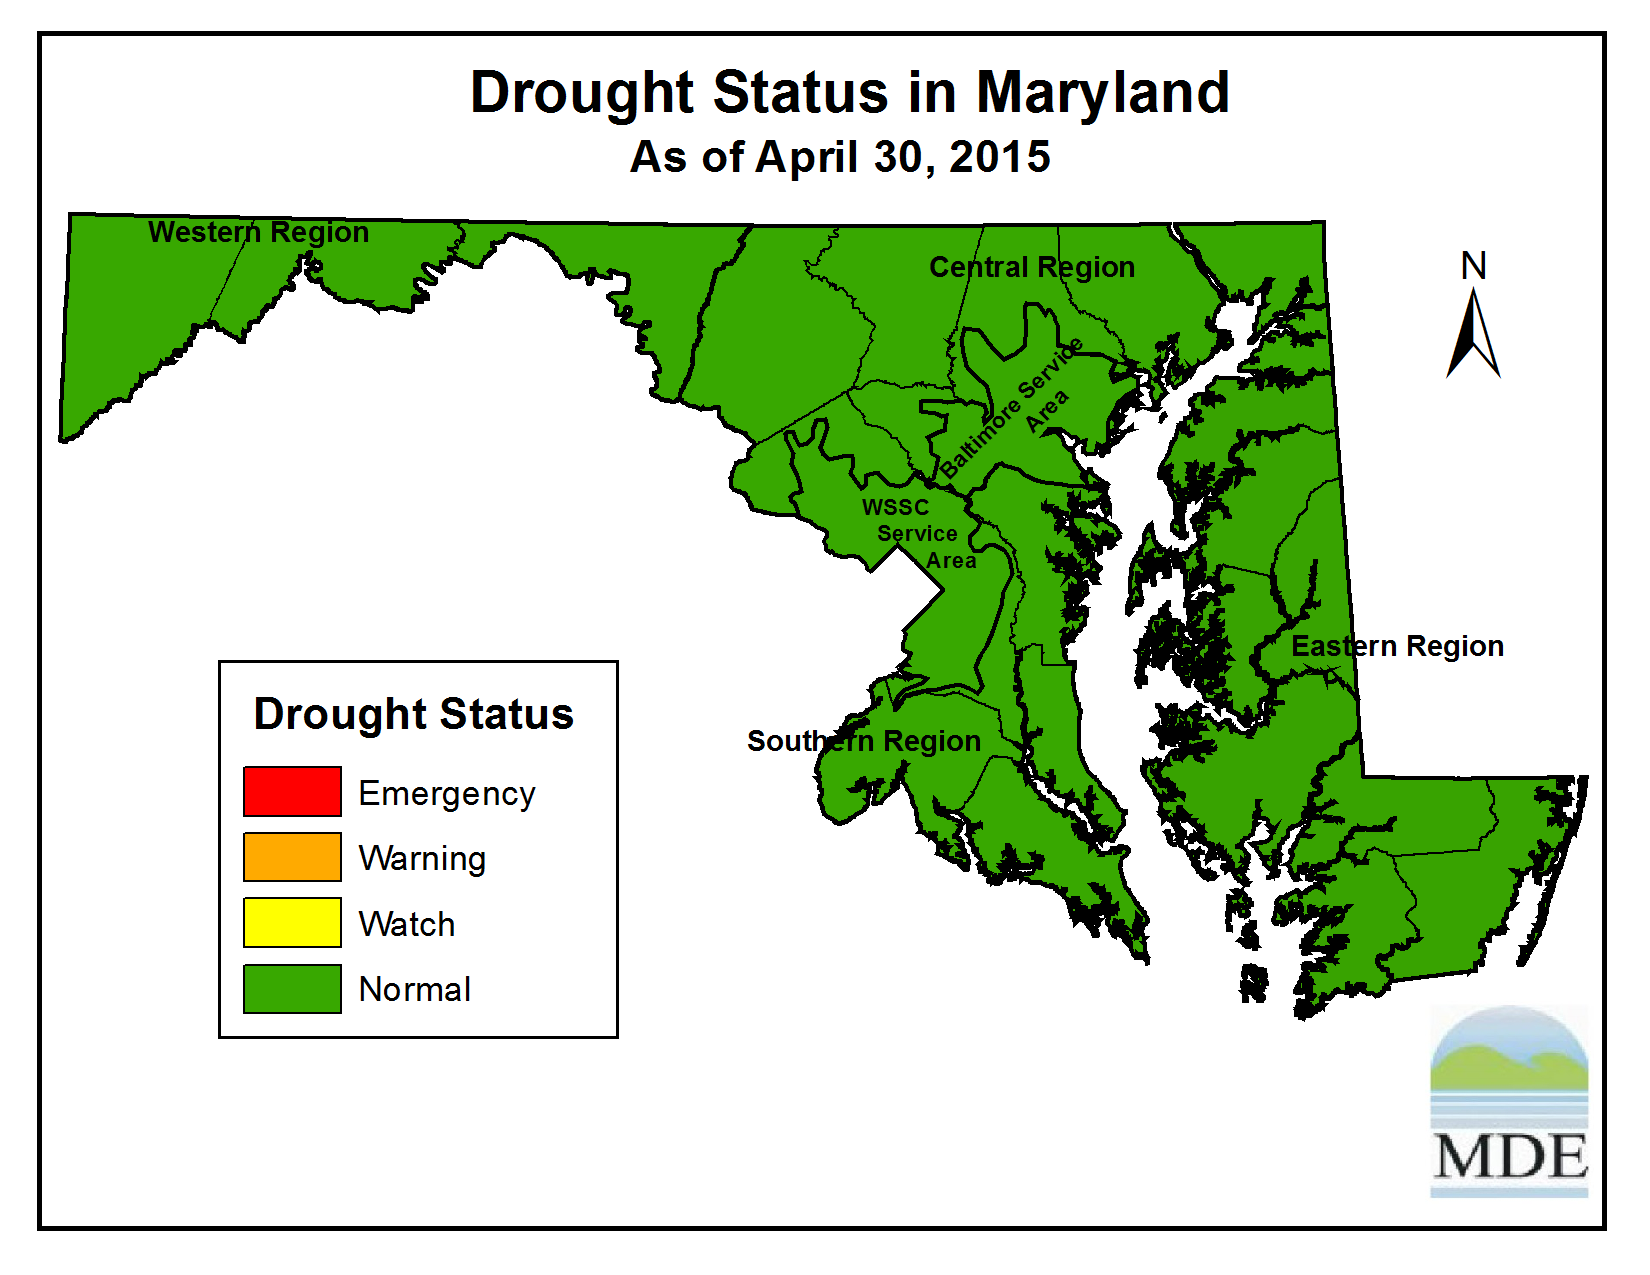 Drought Status as of April 30, 2015